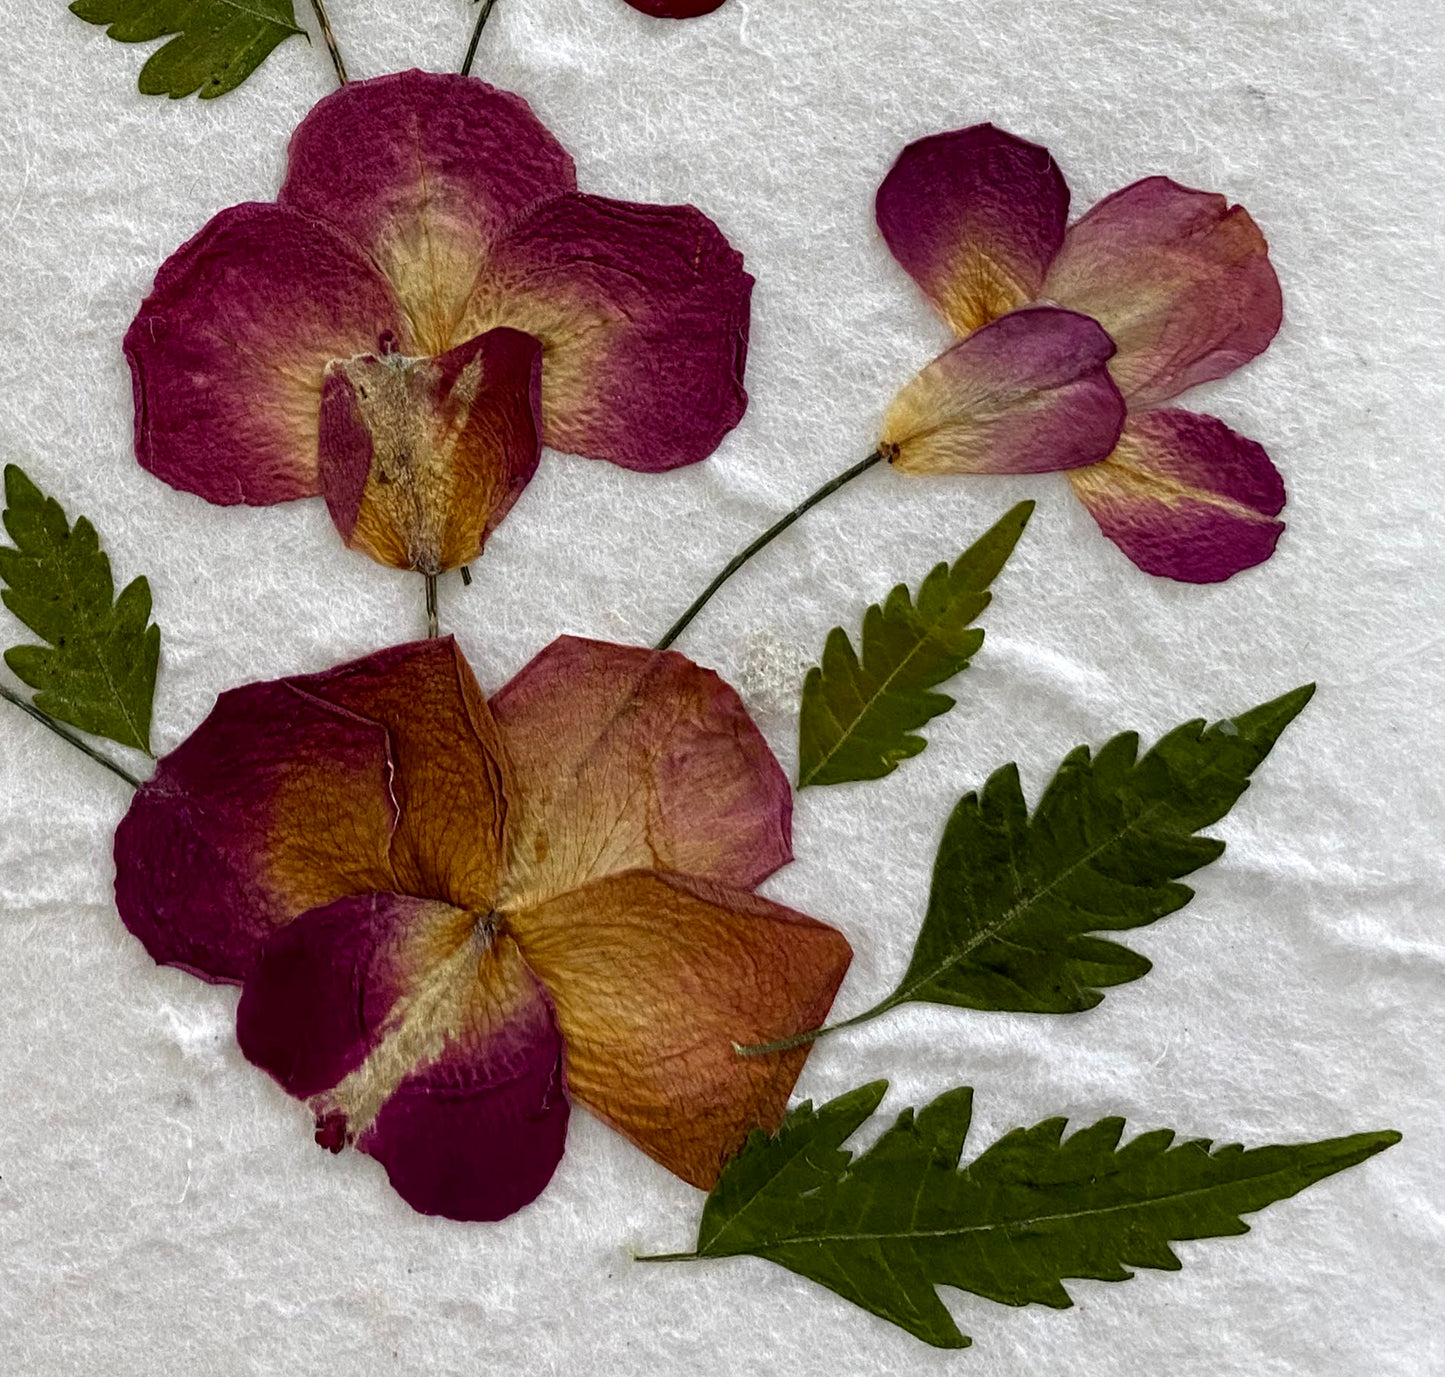 Handmade Mulberry Paper Greeting Card  5x7 Inch Random Pack (3 Rose Petal)